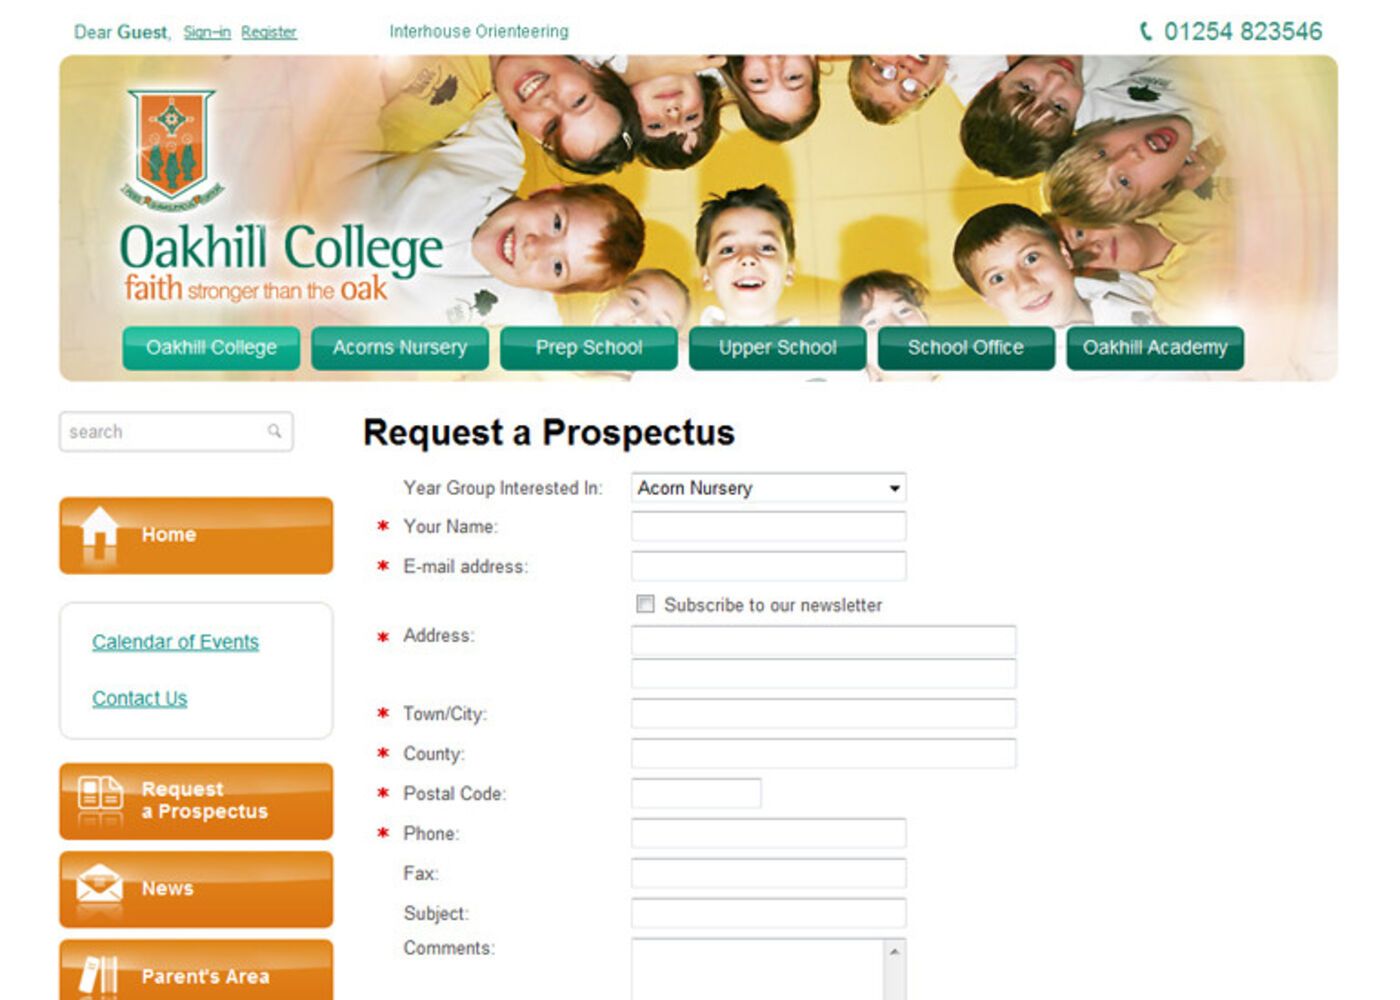 Oakhill College Site Form - Request a Prospectus